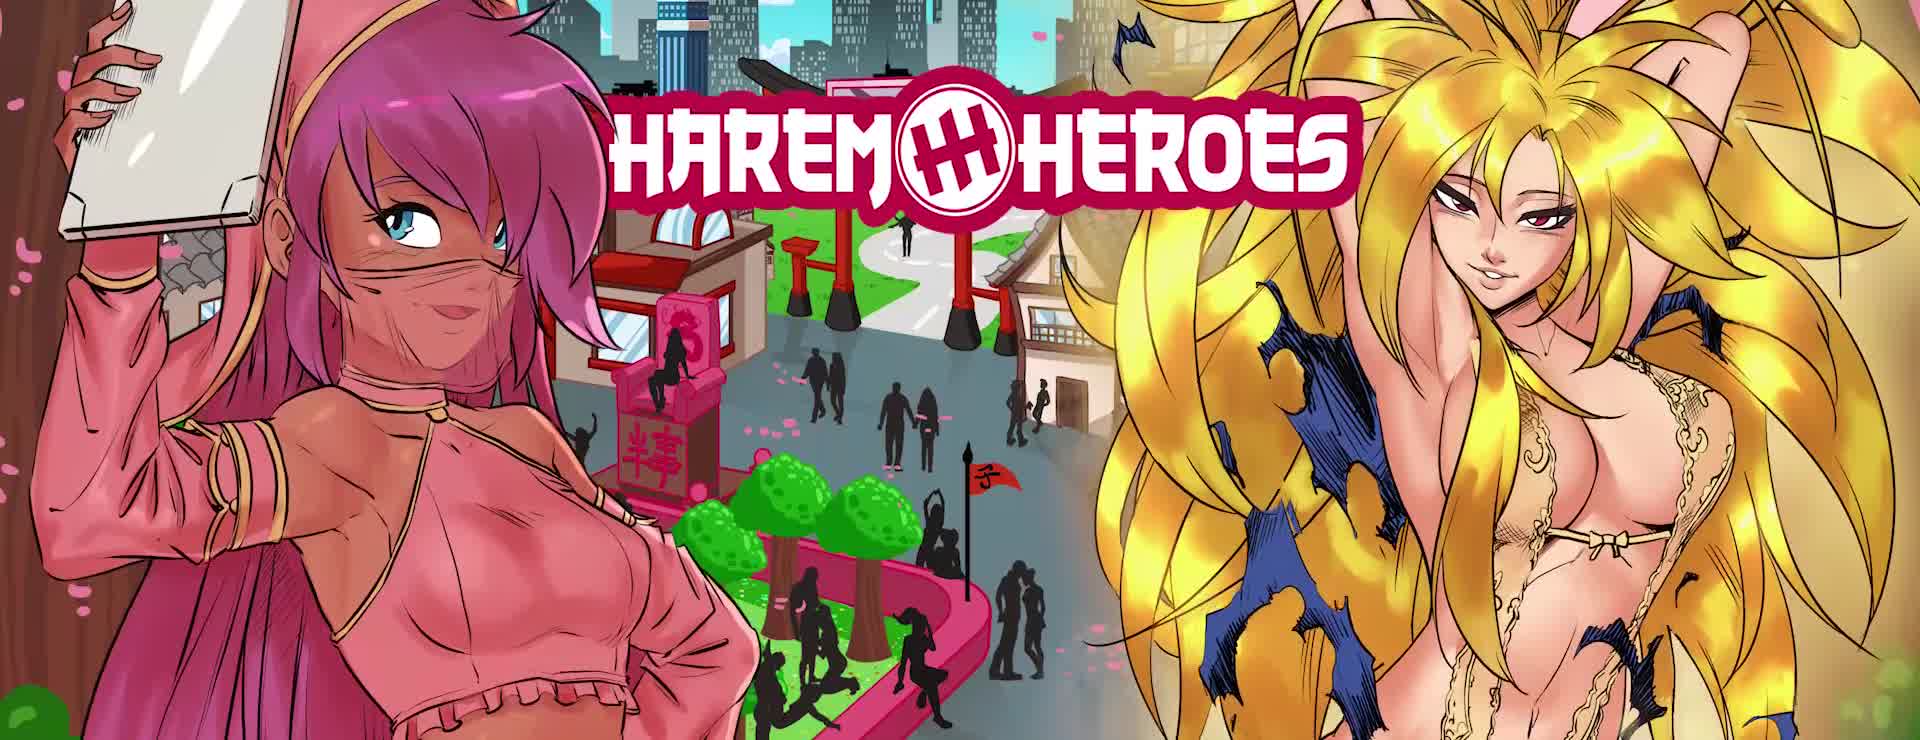 Heroes Harem